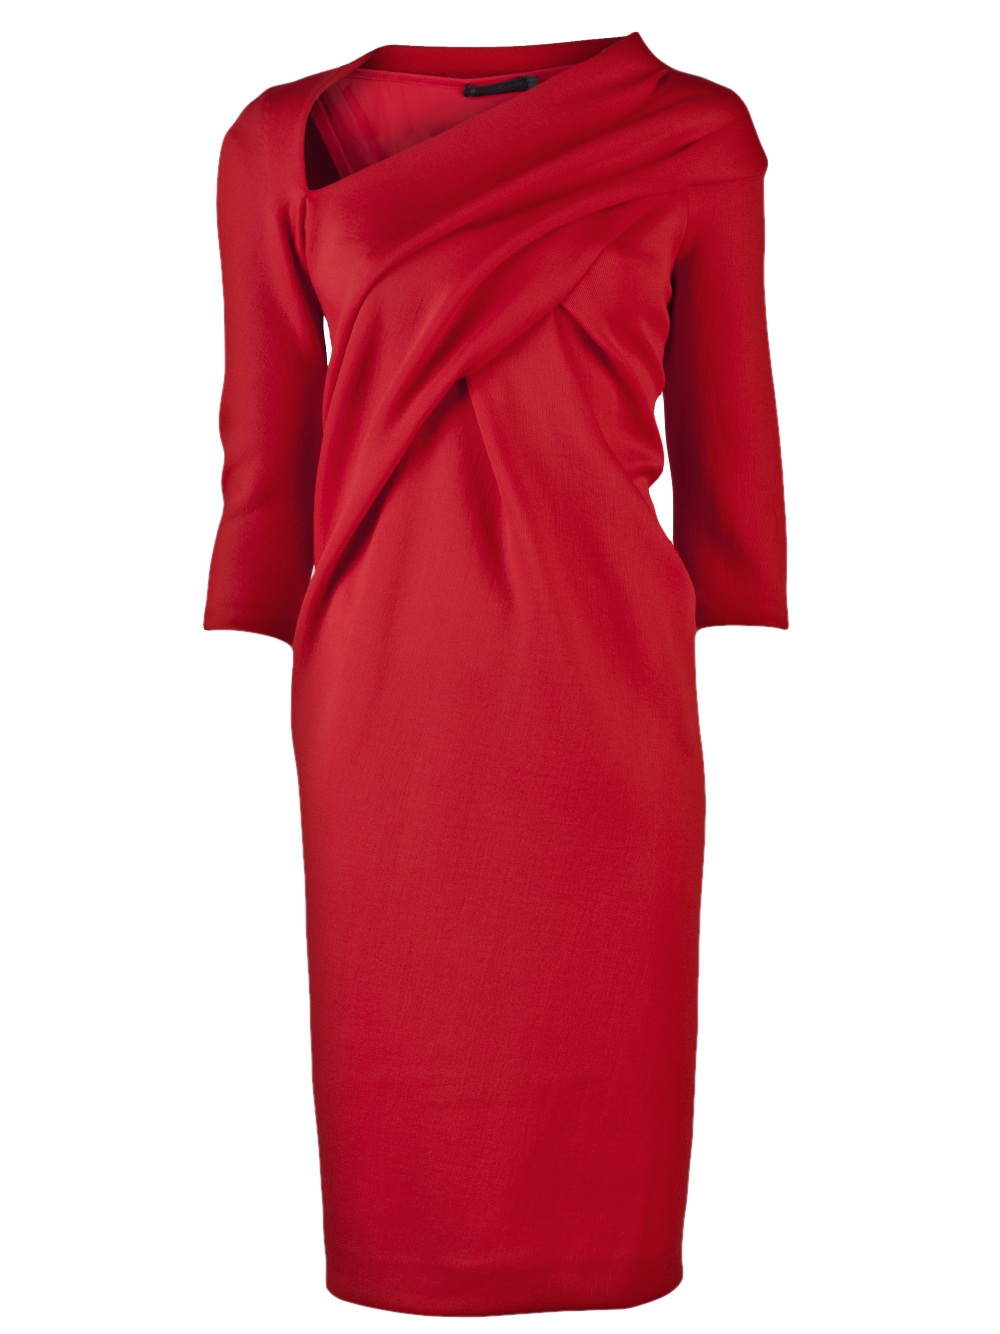 Donna Karan New York Asymmetrical Dress in Red | Lyst